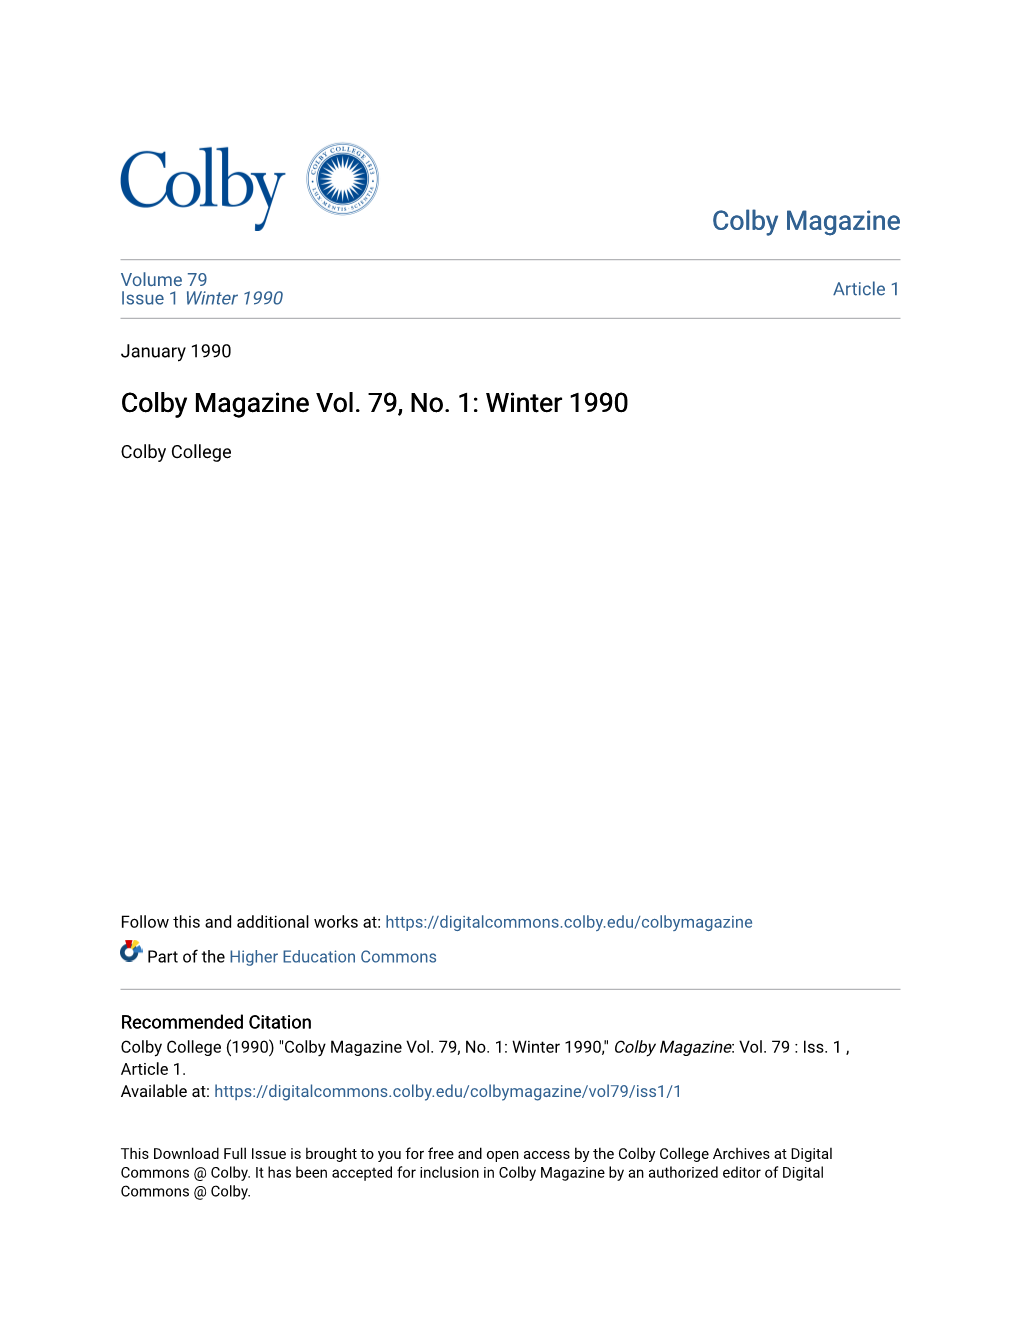 Colby Magazine Vol. 79, No. 1: Winter 1990